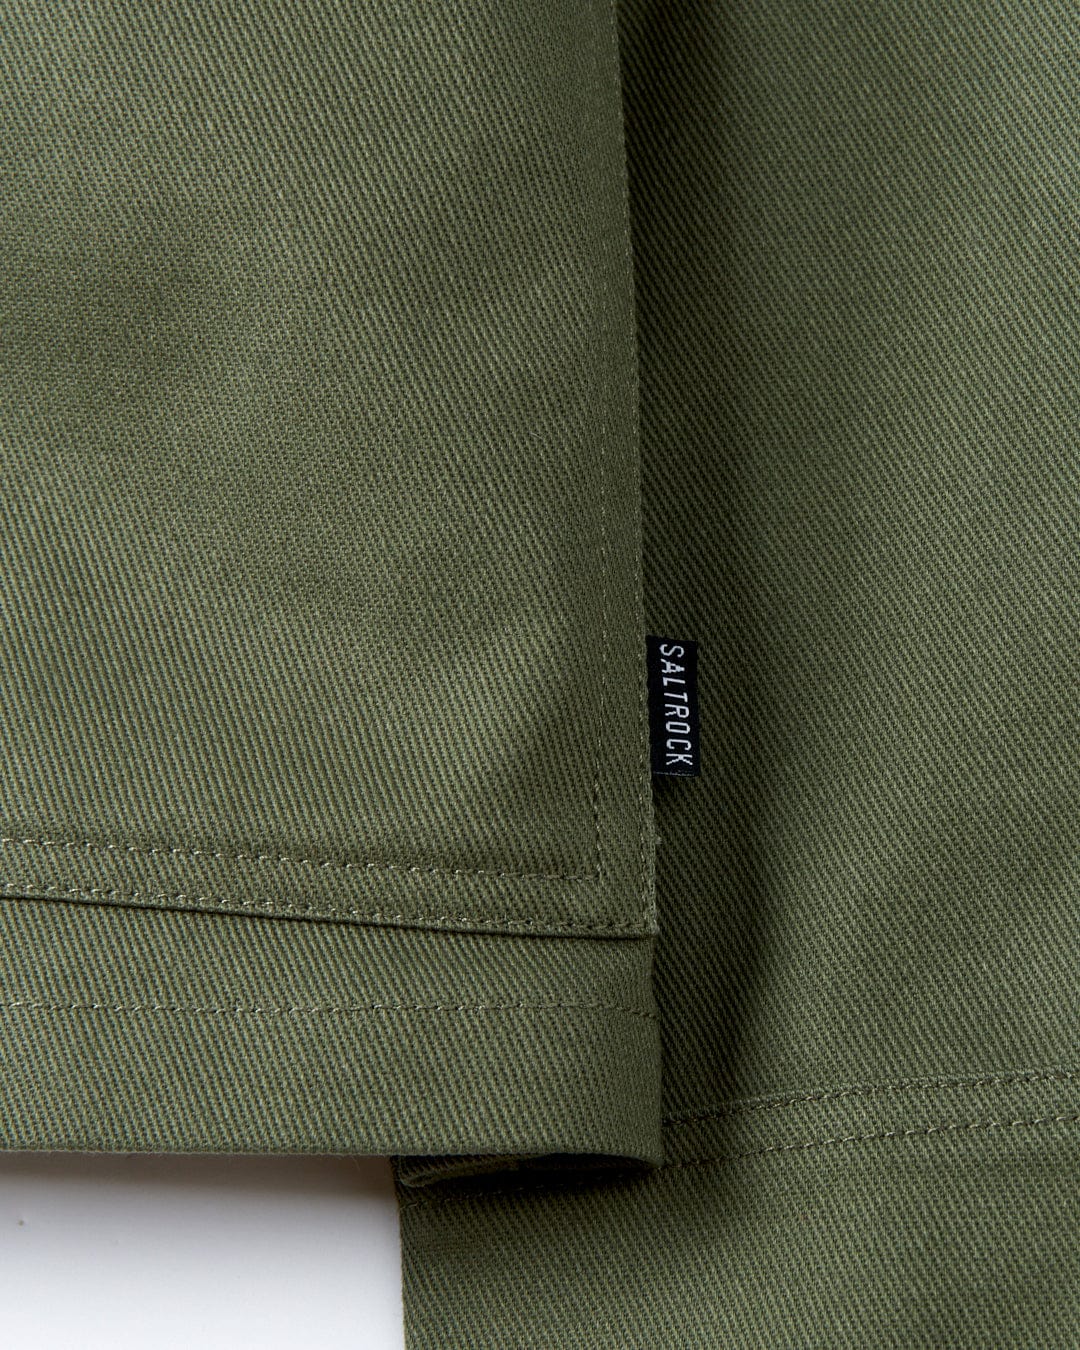 A close up of a Saltrock Barden - Womens Lightweight Utility Jacket in dark green cotton twill fabric.